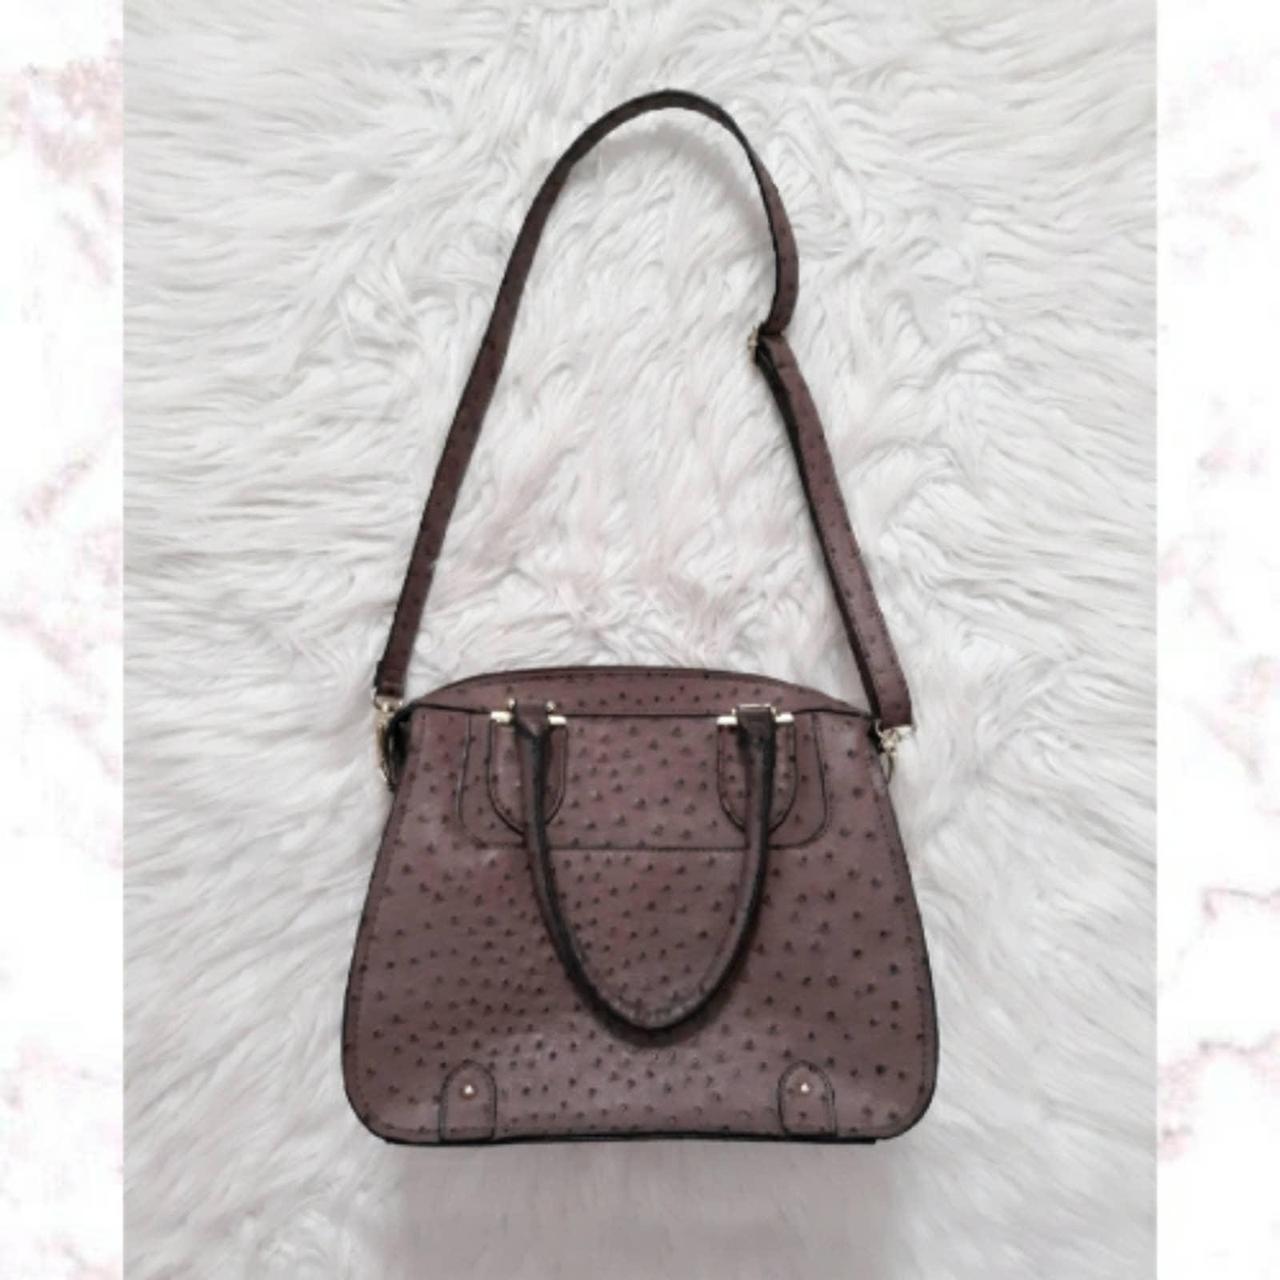 Sale! - London Fog Handbag Purse Shoulder Bag - Black - Preowned -Good  Condition | eBay